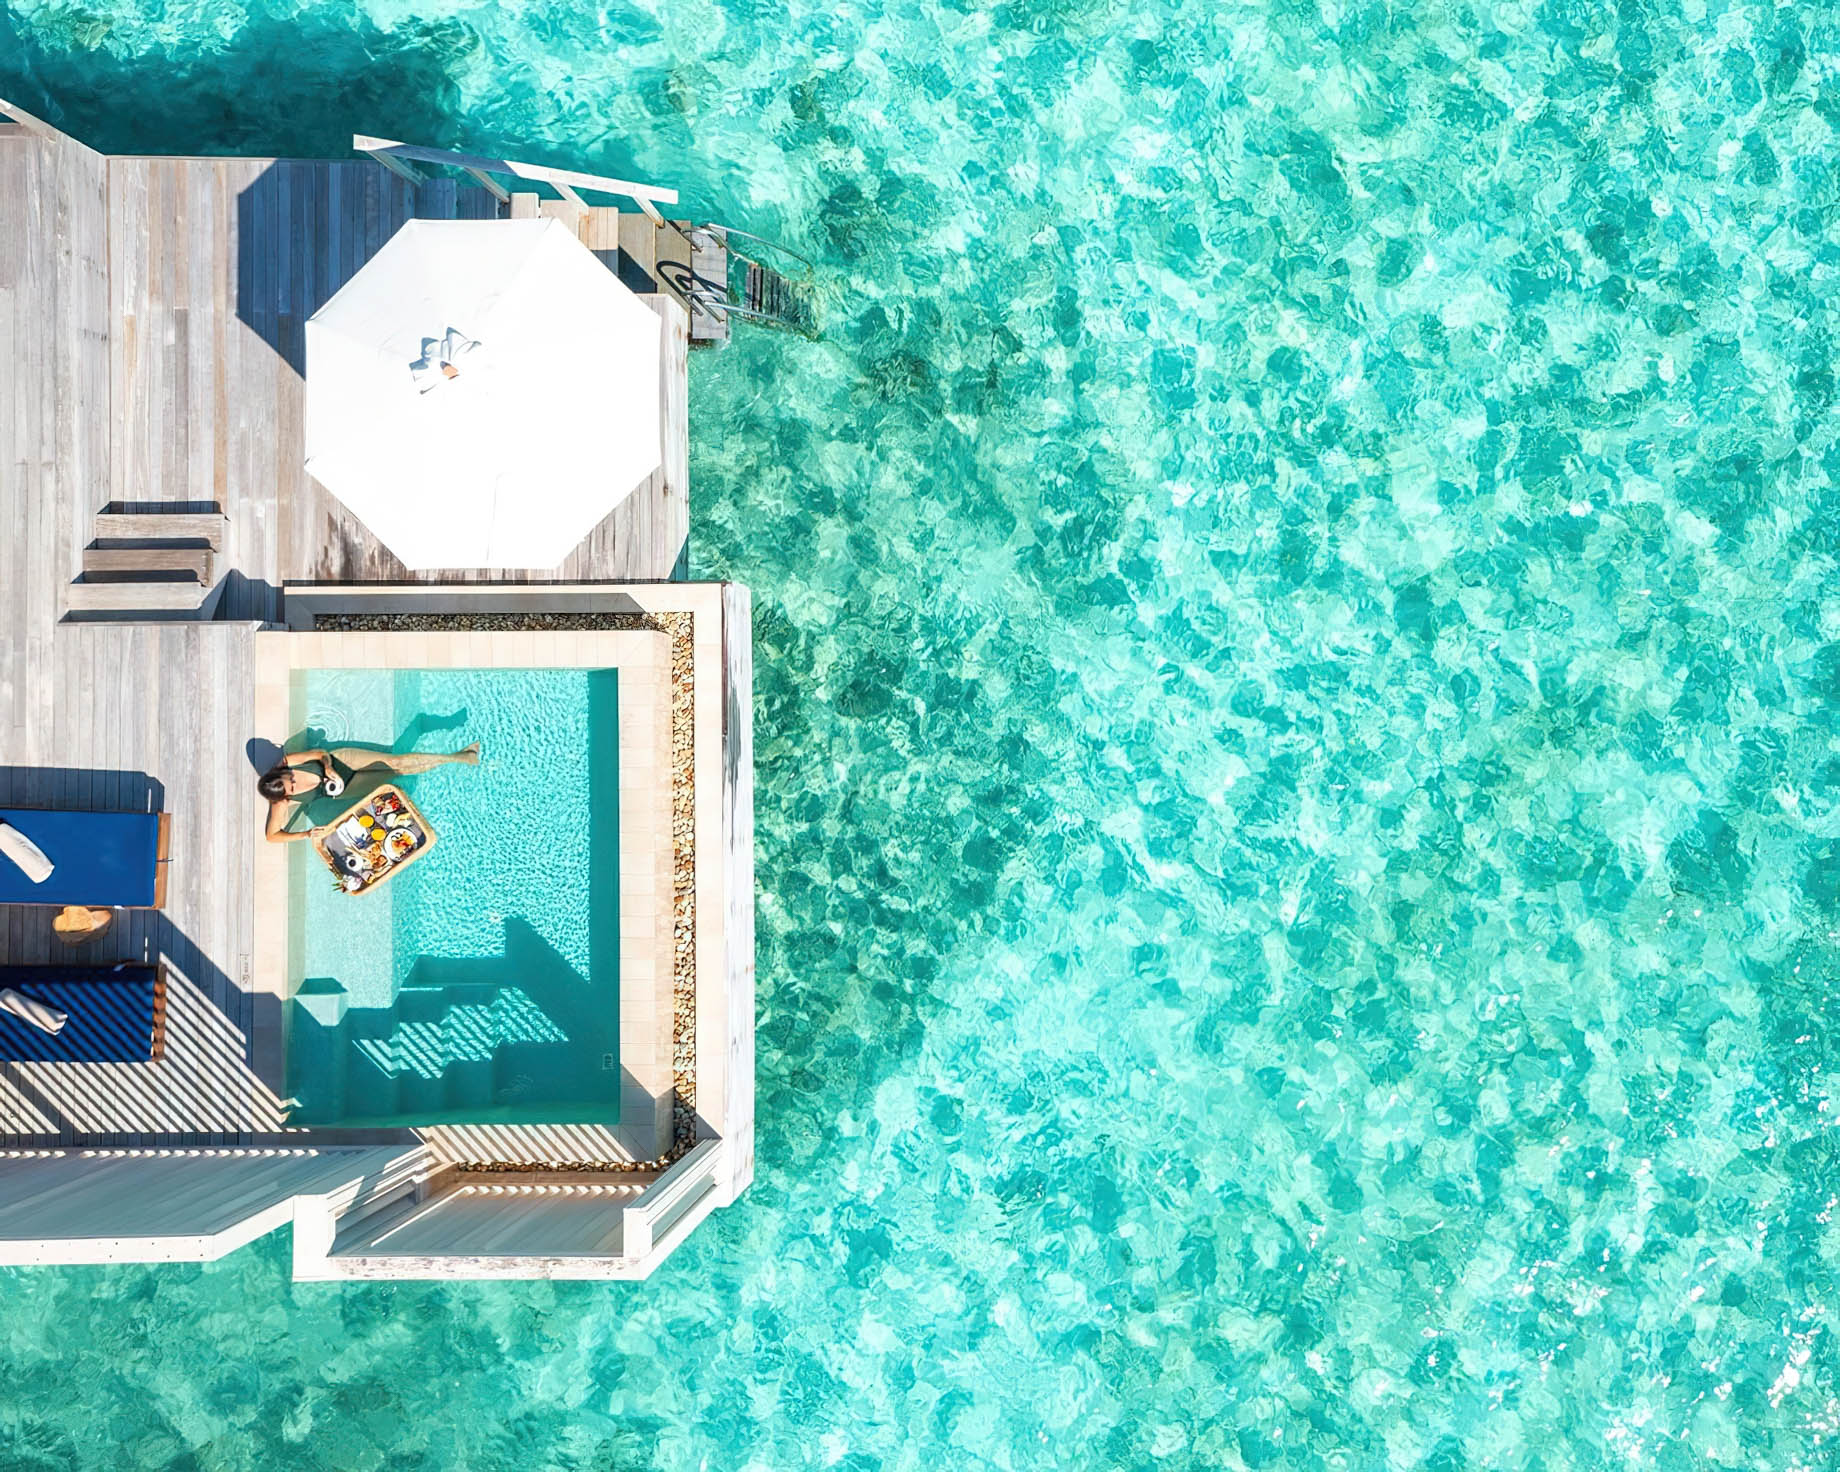 Baglioni Resort Maldives – Maagau Island, Rinbudhoo, Maldives – Overwater Villa Pool Floating Breakfast Basket Overhead Aerial View